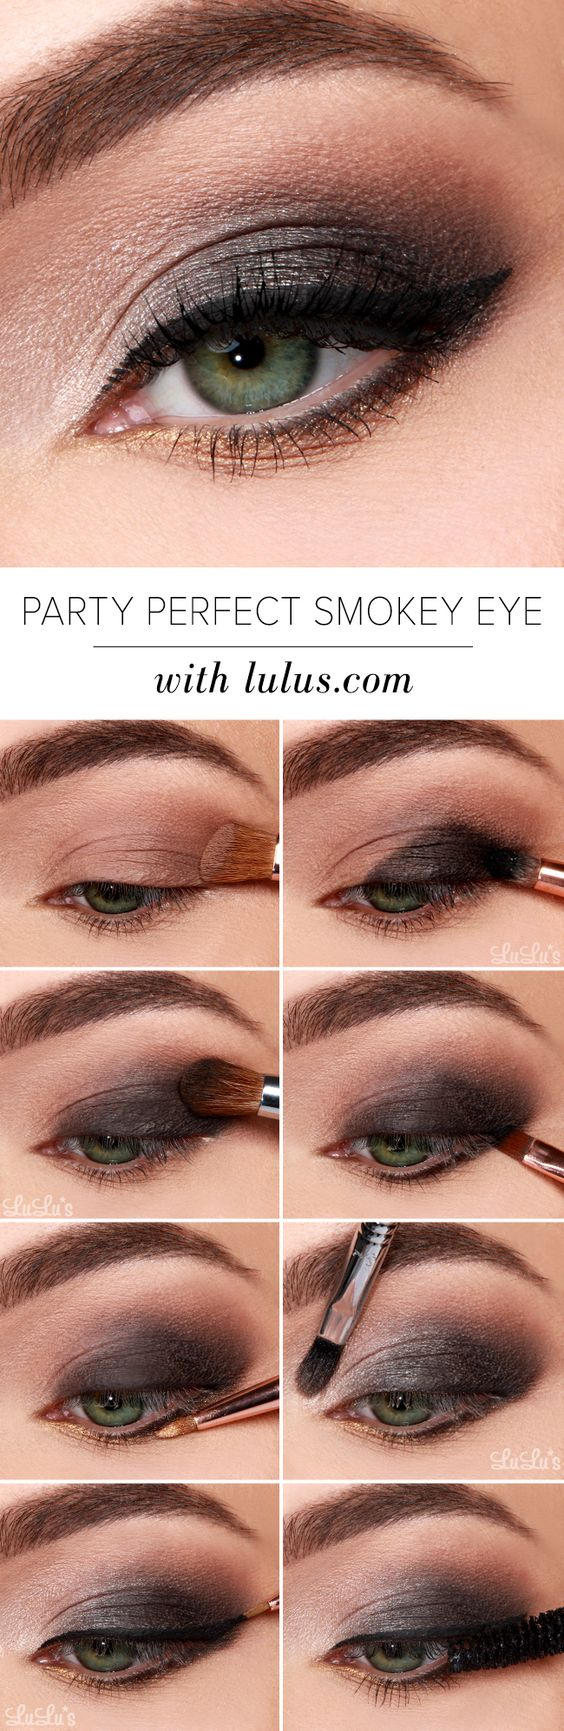 Natural Smokey Eye Makeup 40 Hottest Smokey Eye Makeup Ideas 2019 Smokey Eye Tutorials For